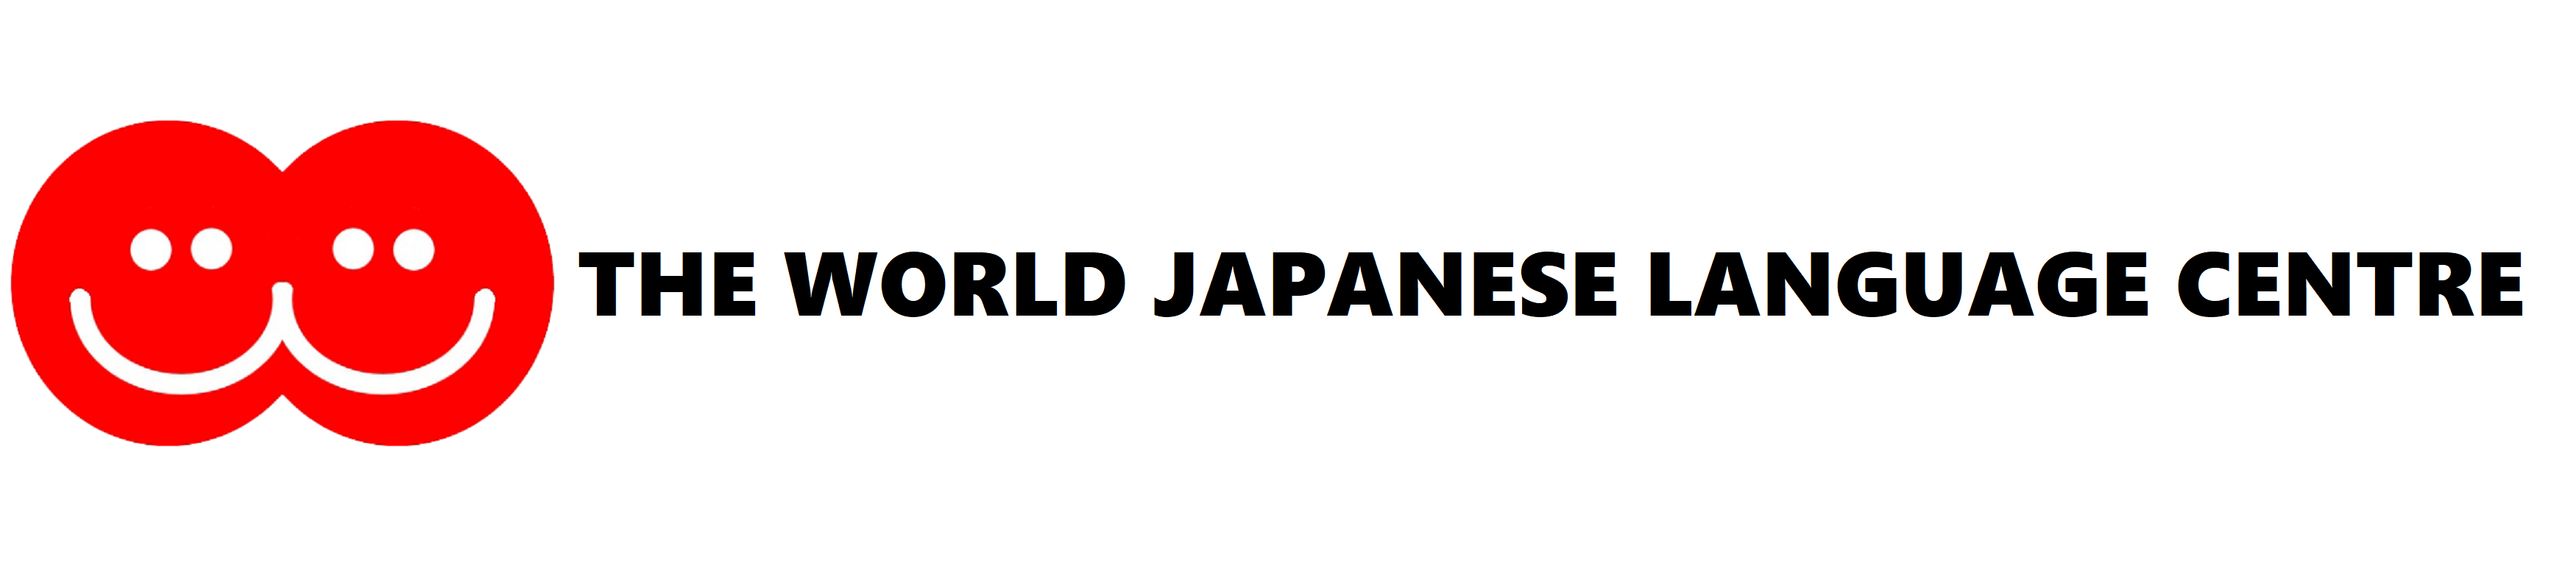 The World Japanese Language Centre